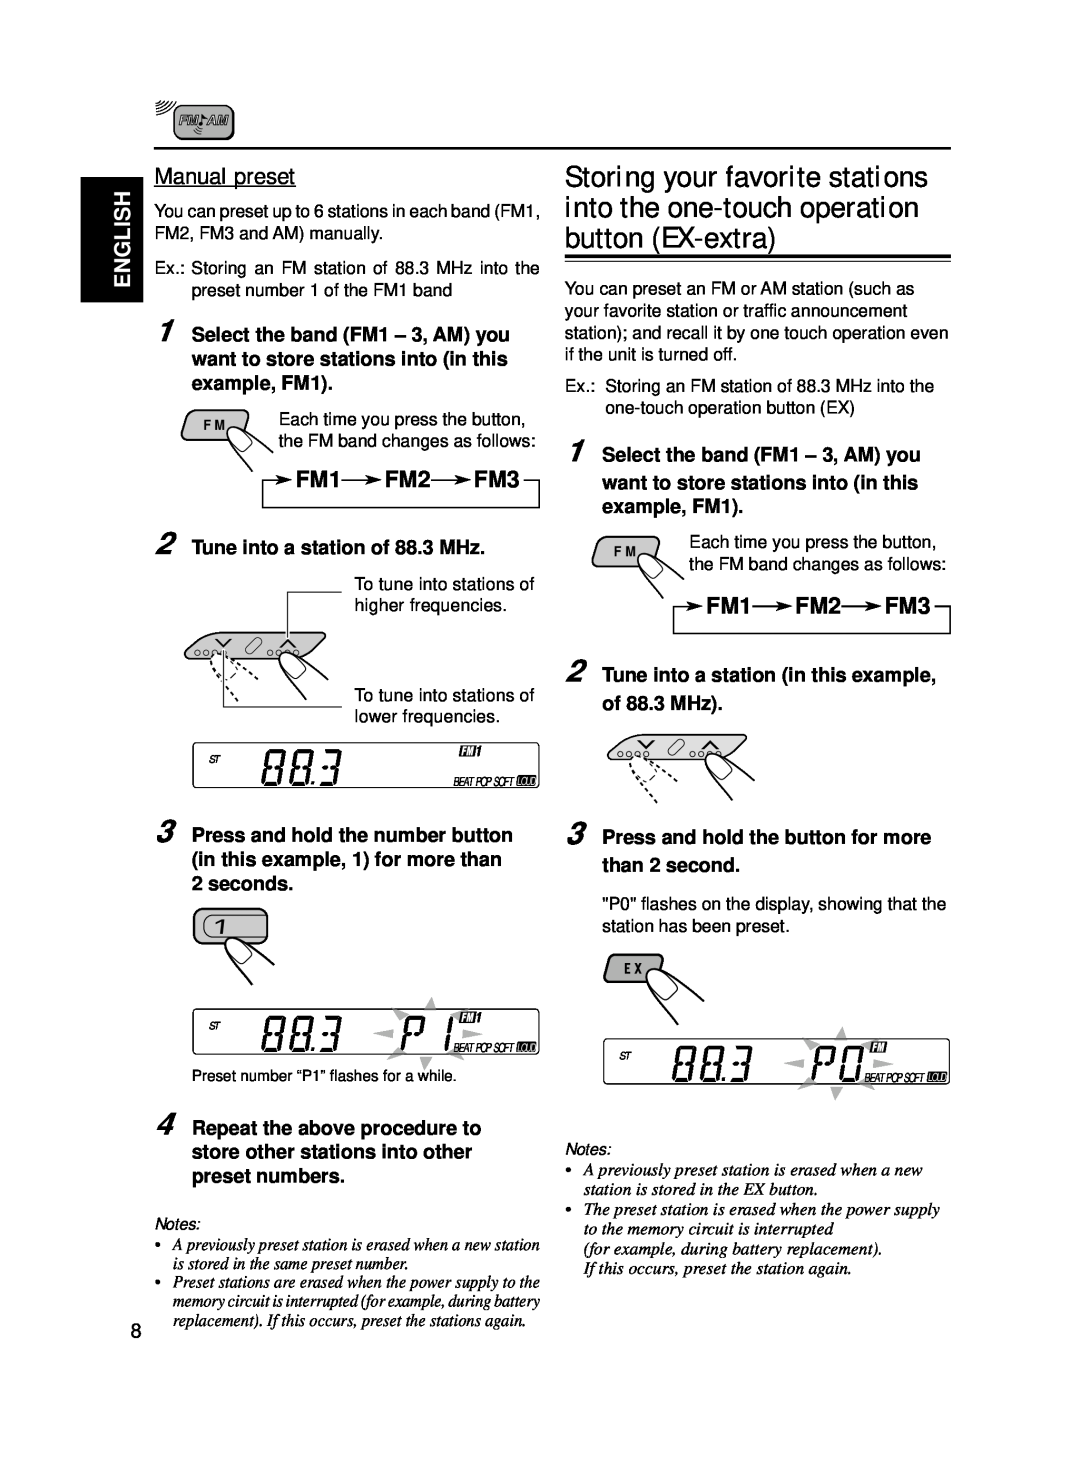 JVC KS-F160 manual Manual preset, FM1FM2FM3, English 